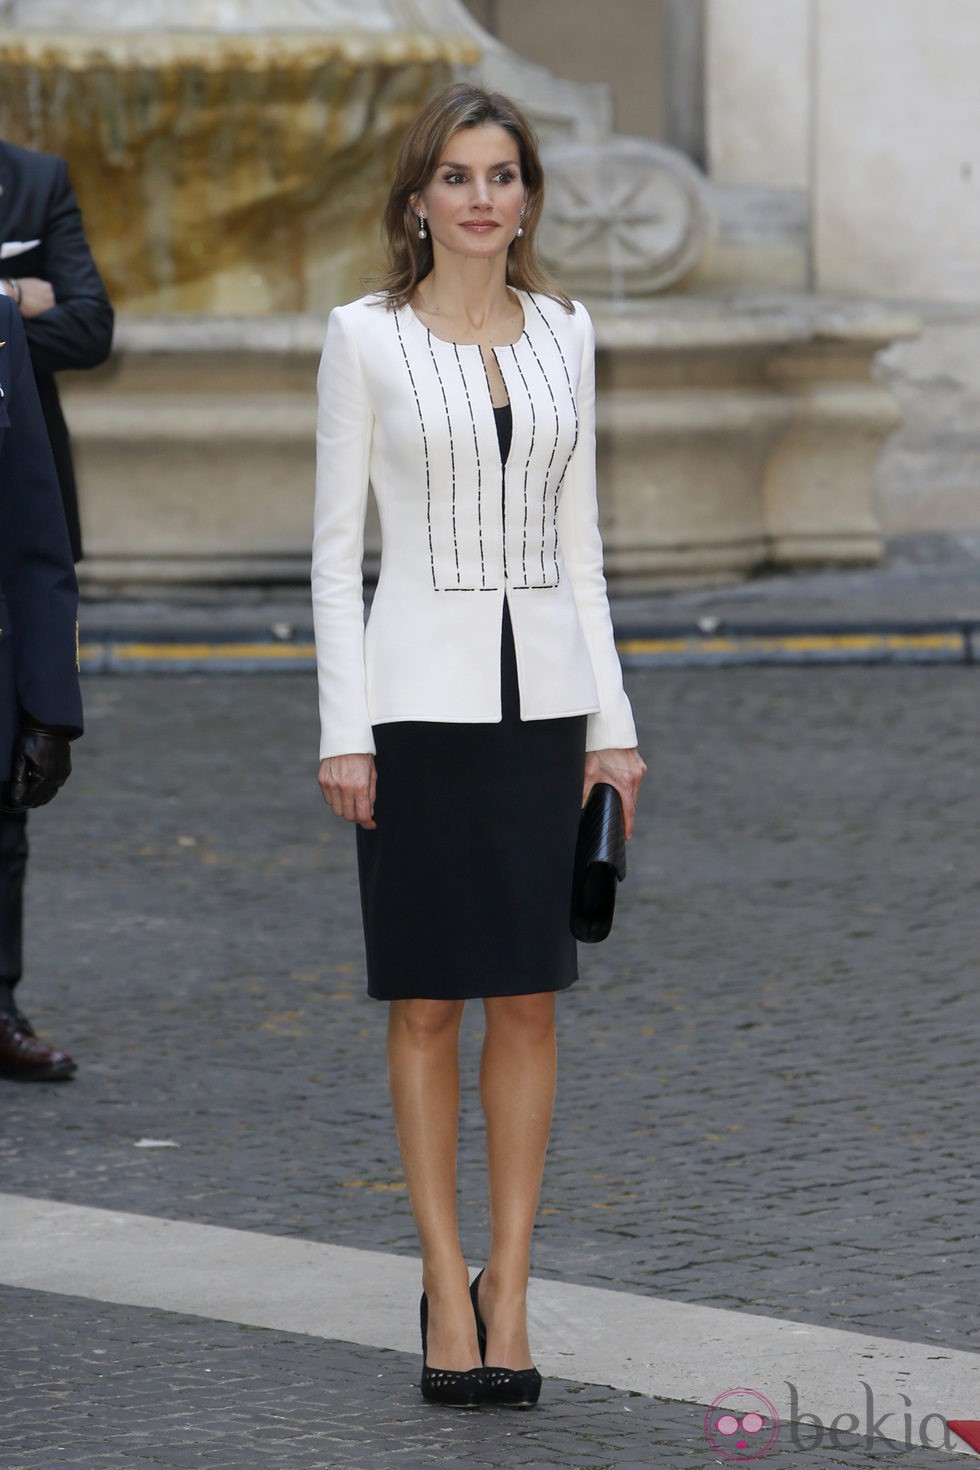 La Reina Letizia en su primer viaje oficial a Italia como Reina de España